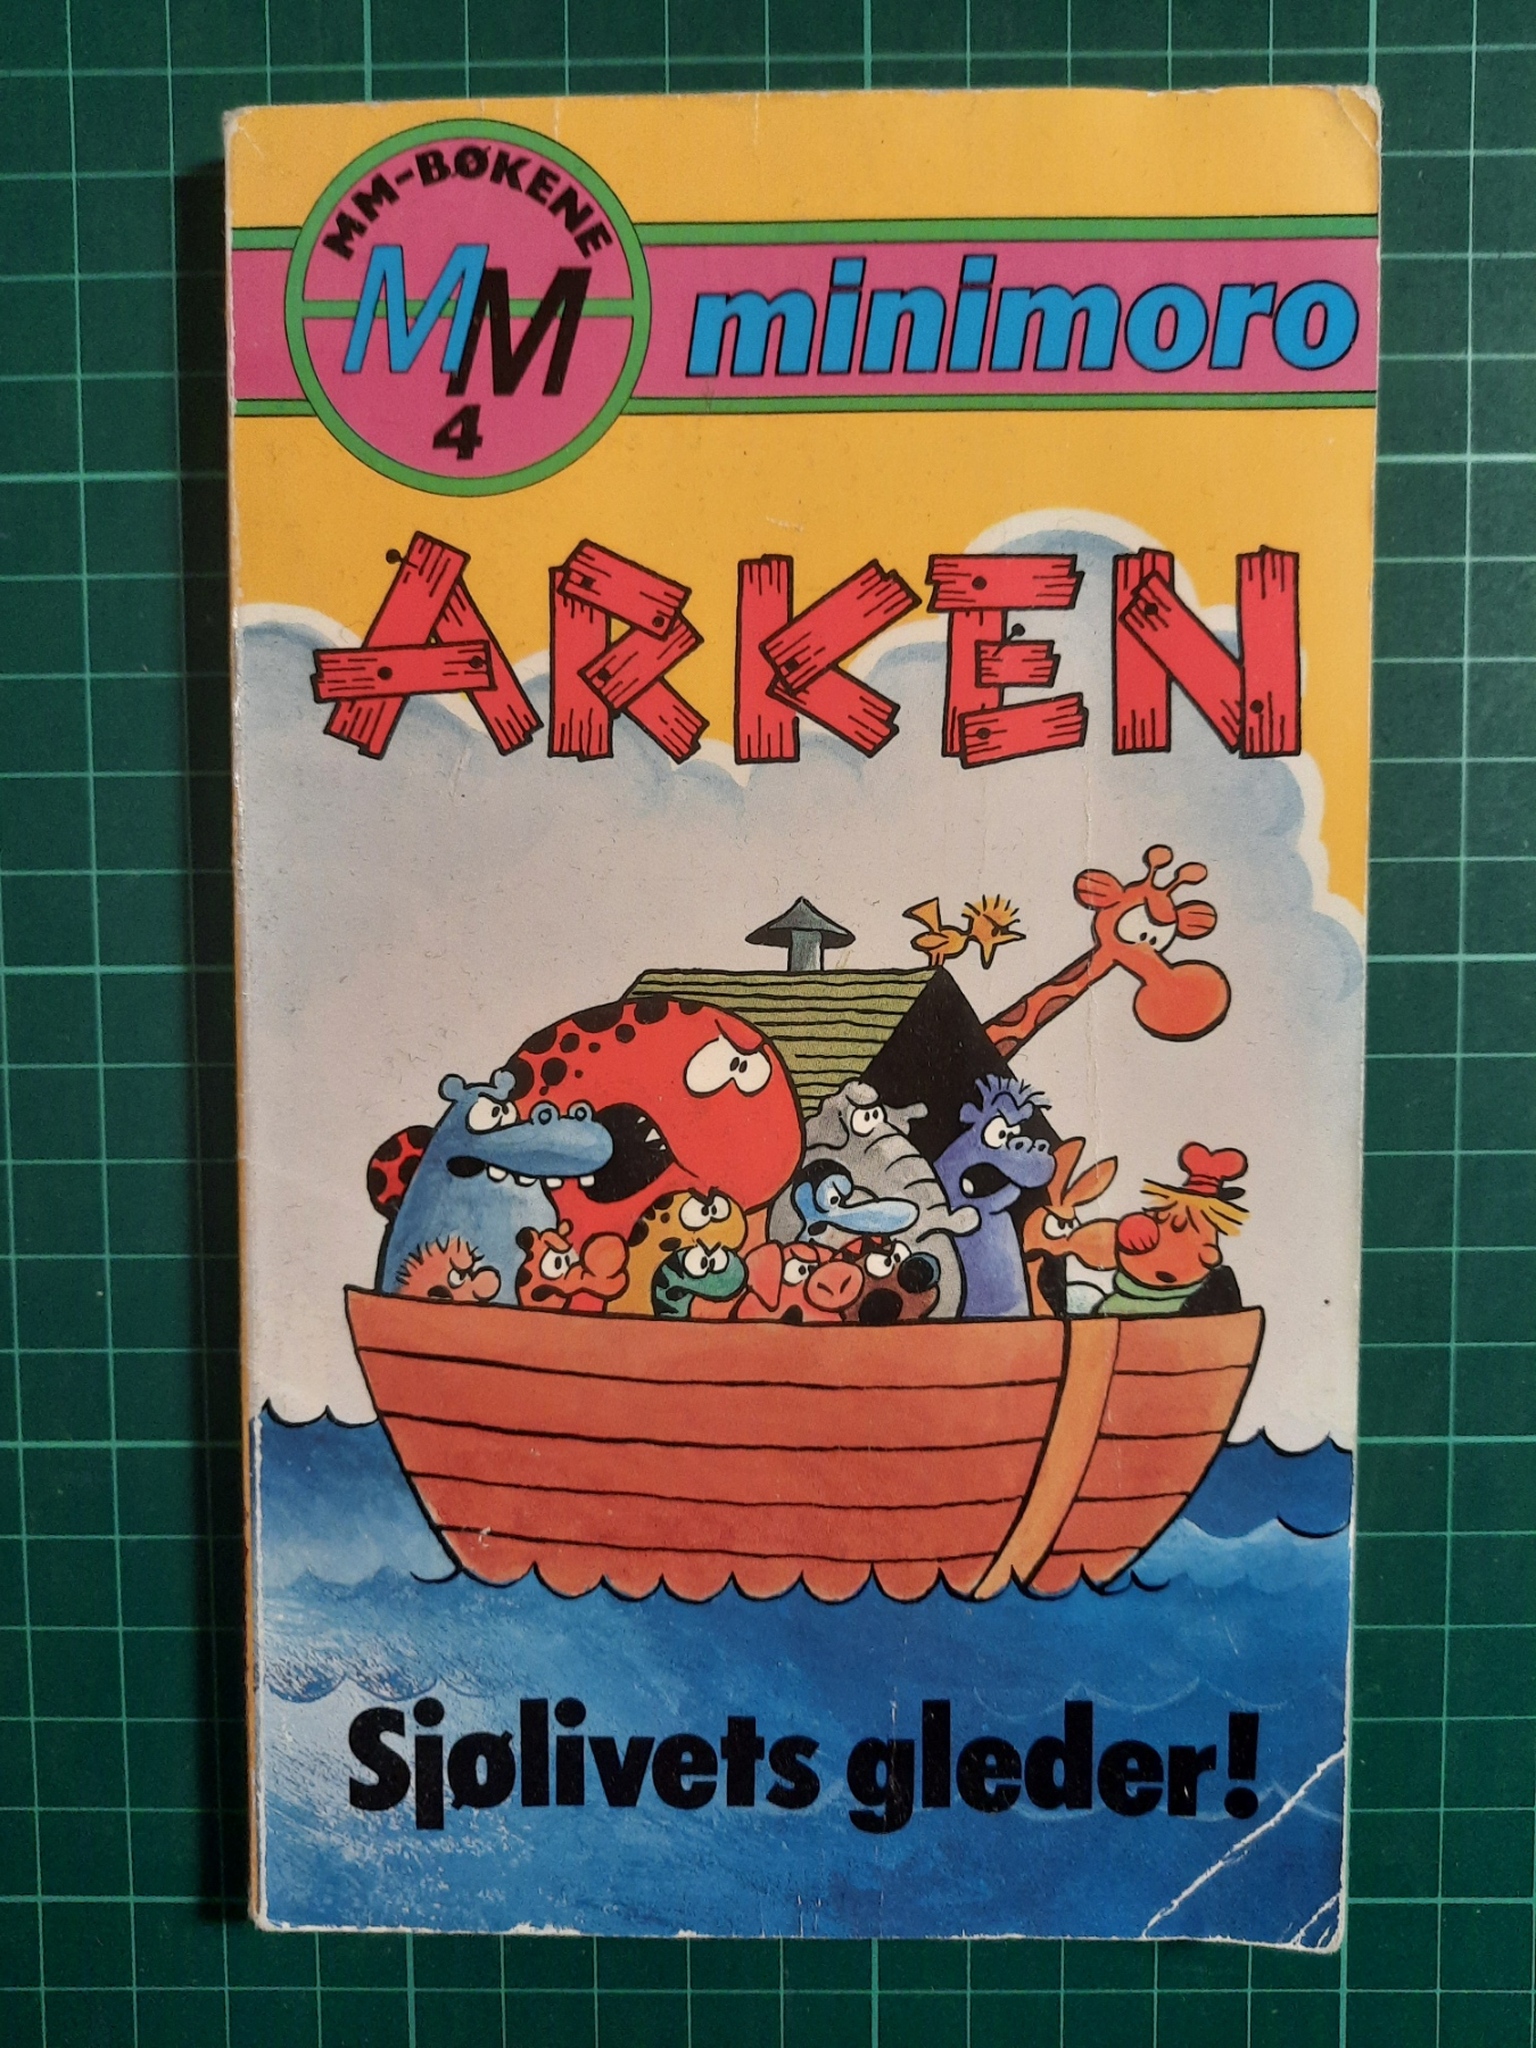 Minimoro pocket 04 : Arken, sjølivets gleder!